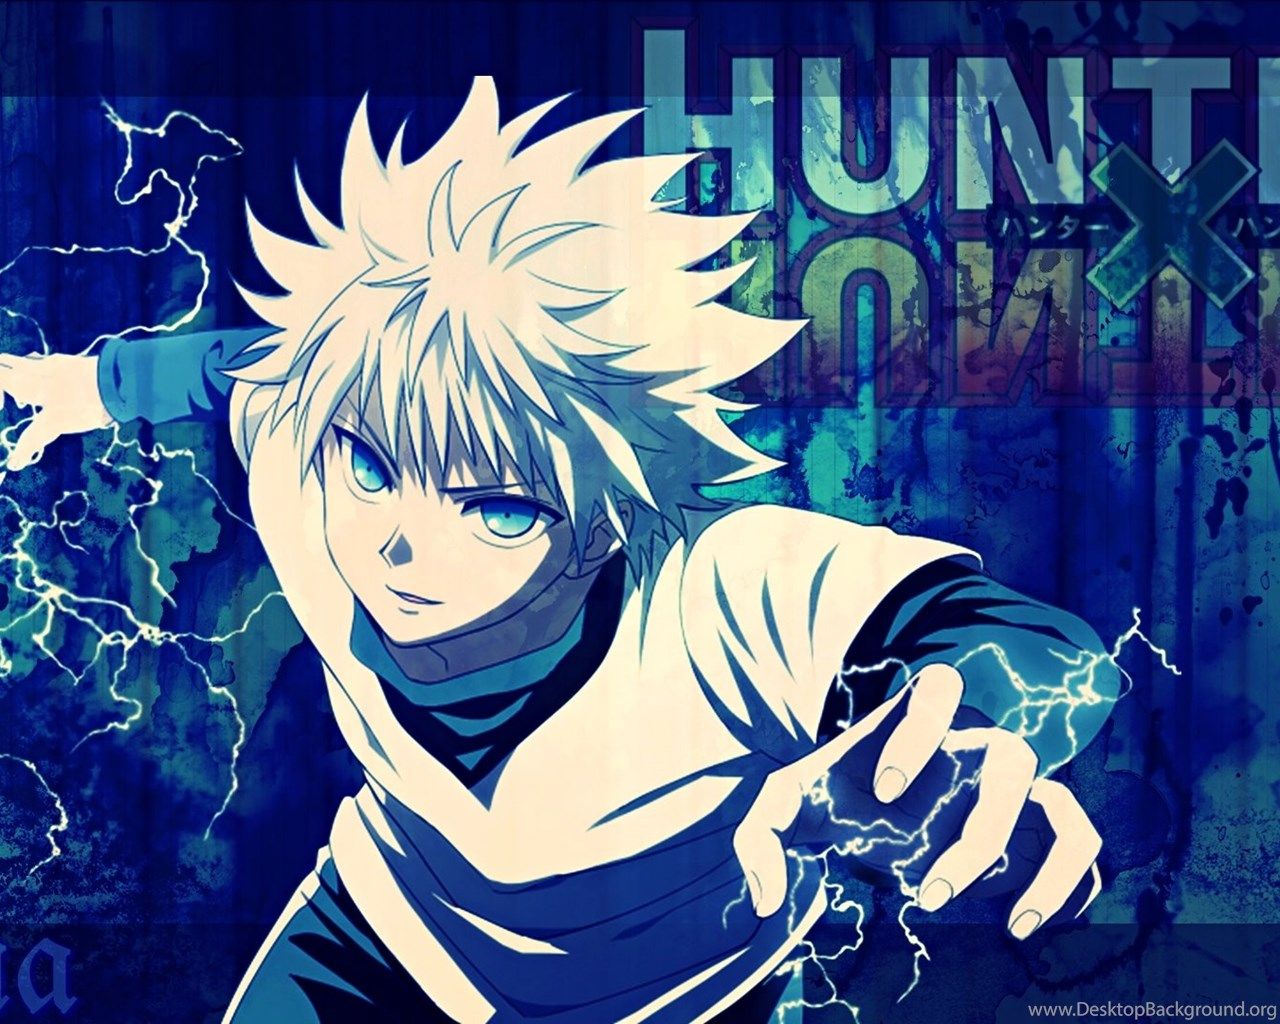 15 Quality Hunter X Hunter Wallpapers, Anime & Manga Desktop